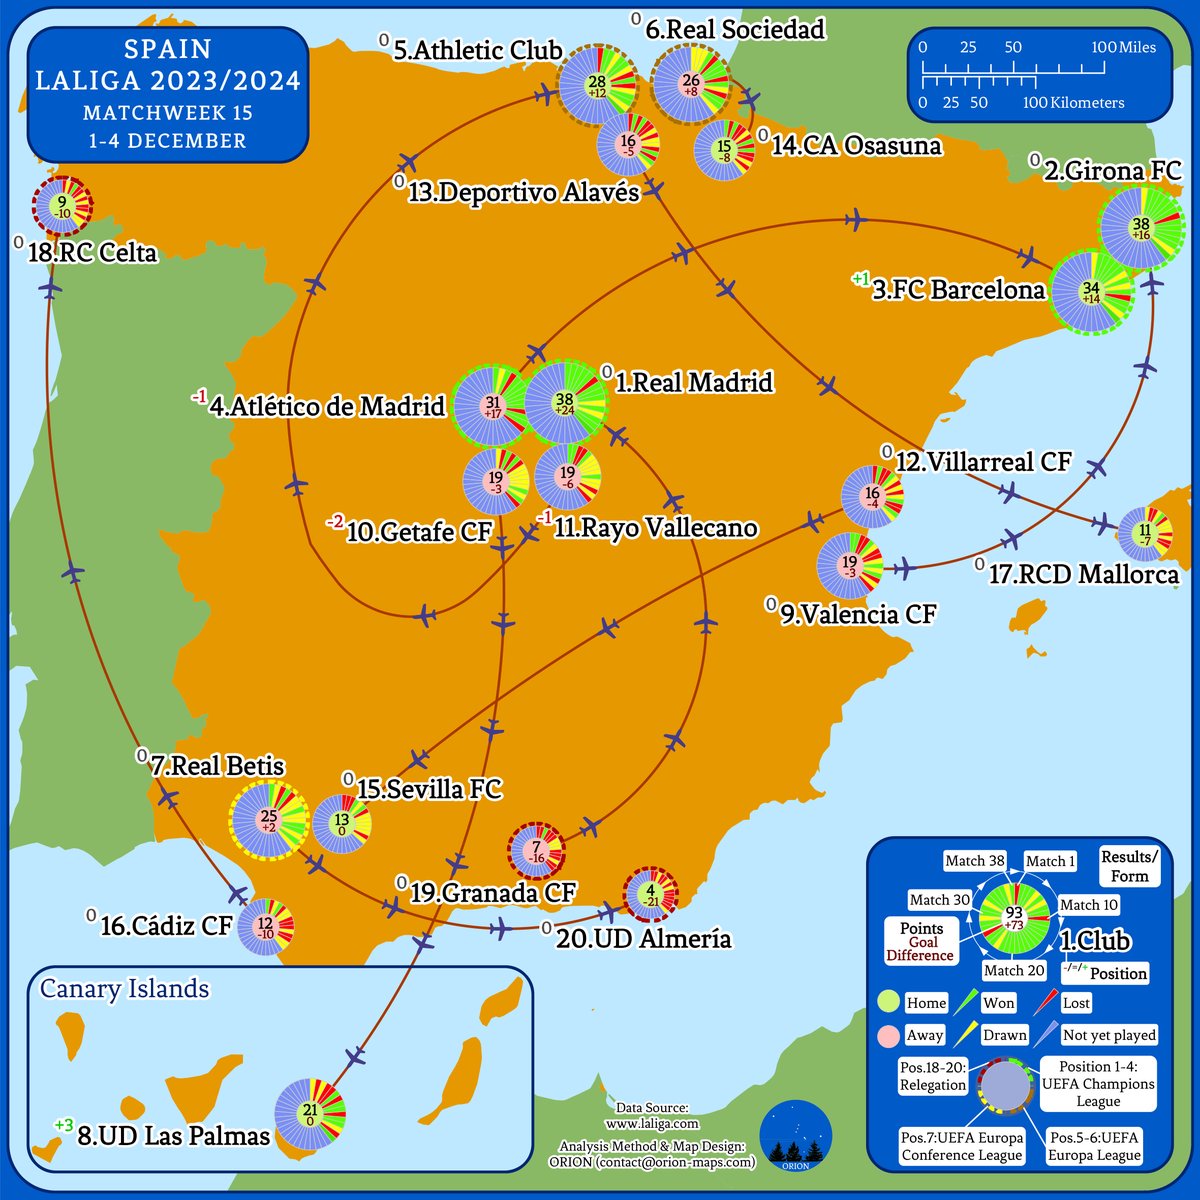 🇪🇸 #SPAIN ⚽️ #LALIGA ⚽️ 2023/2024 ⚽️ MATCHWEEK 15
#LaLigaMaps #football #fútbol #España #iberianpeninsula #sport #mapa